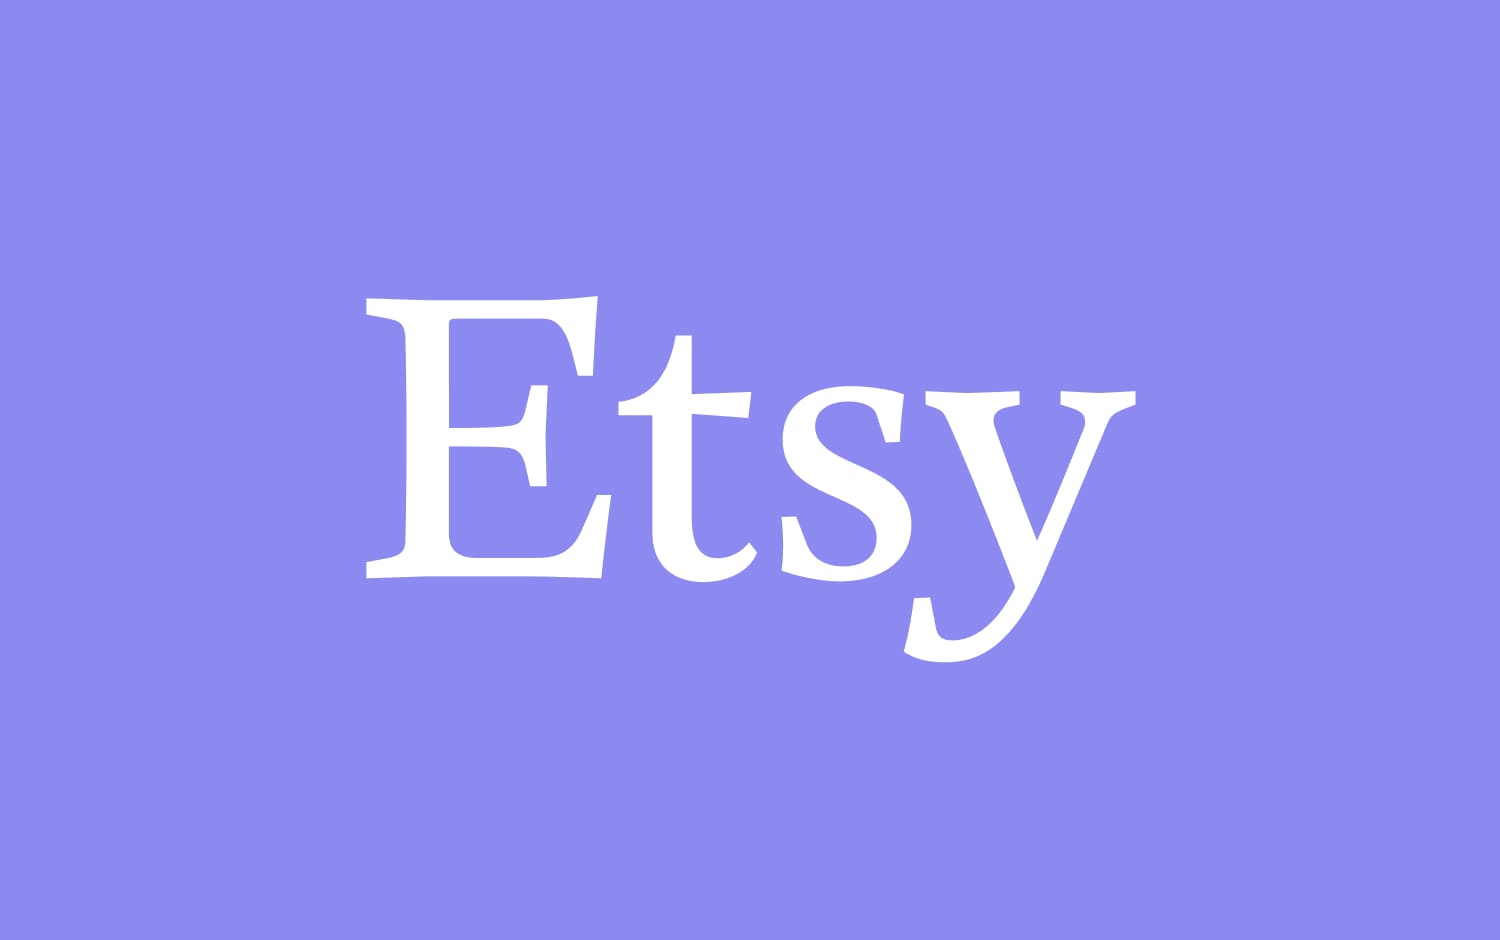 Logo Etsy en lettres blanches sur fond lavande